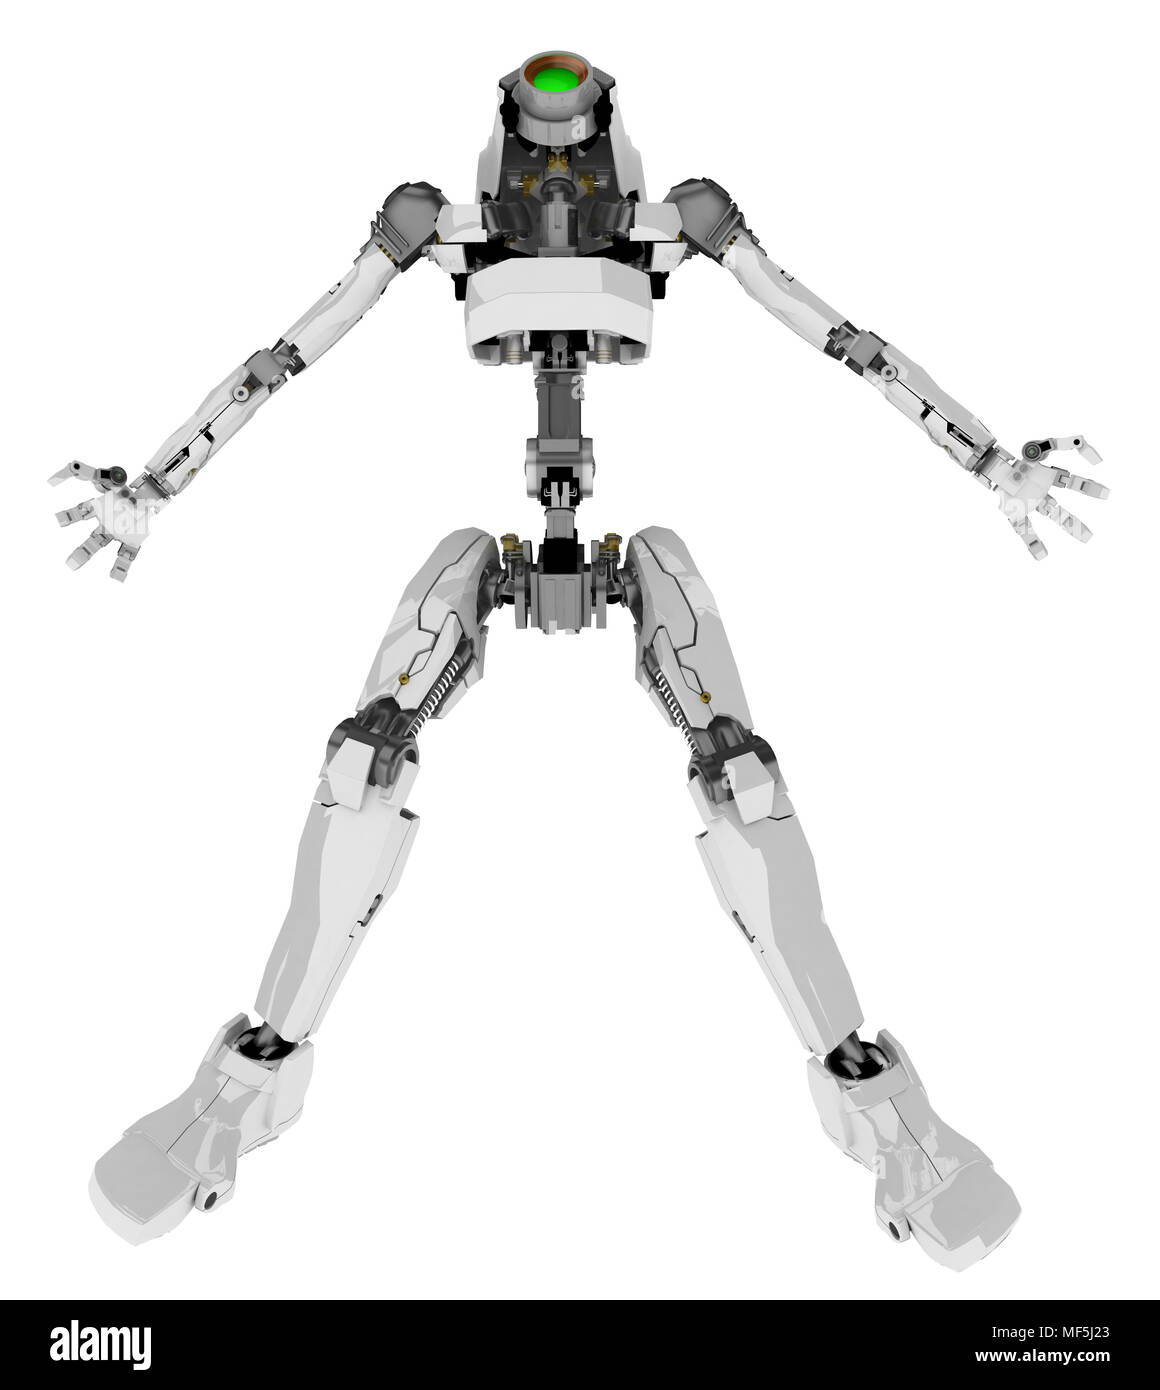 Slim 3d robotic figure, arms legs spread, isolated Stock Photo